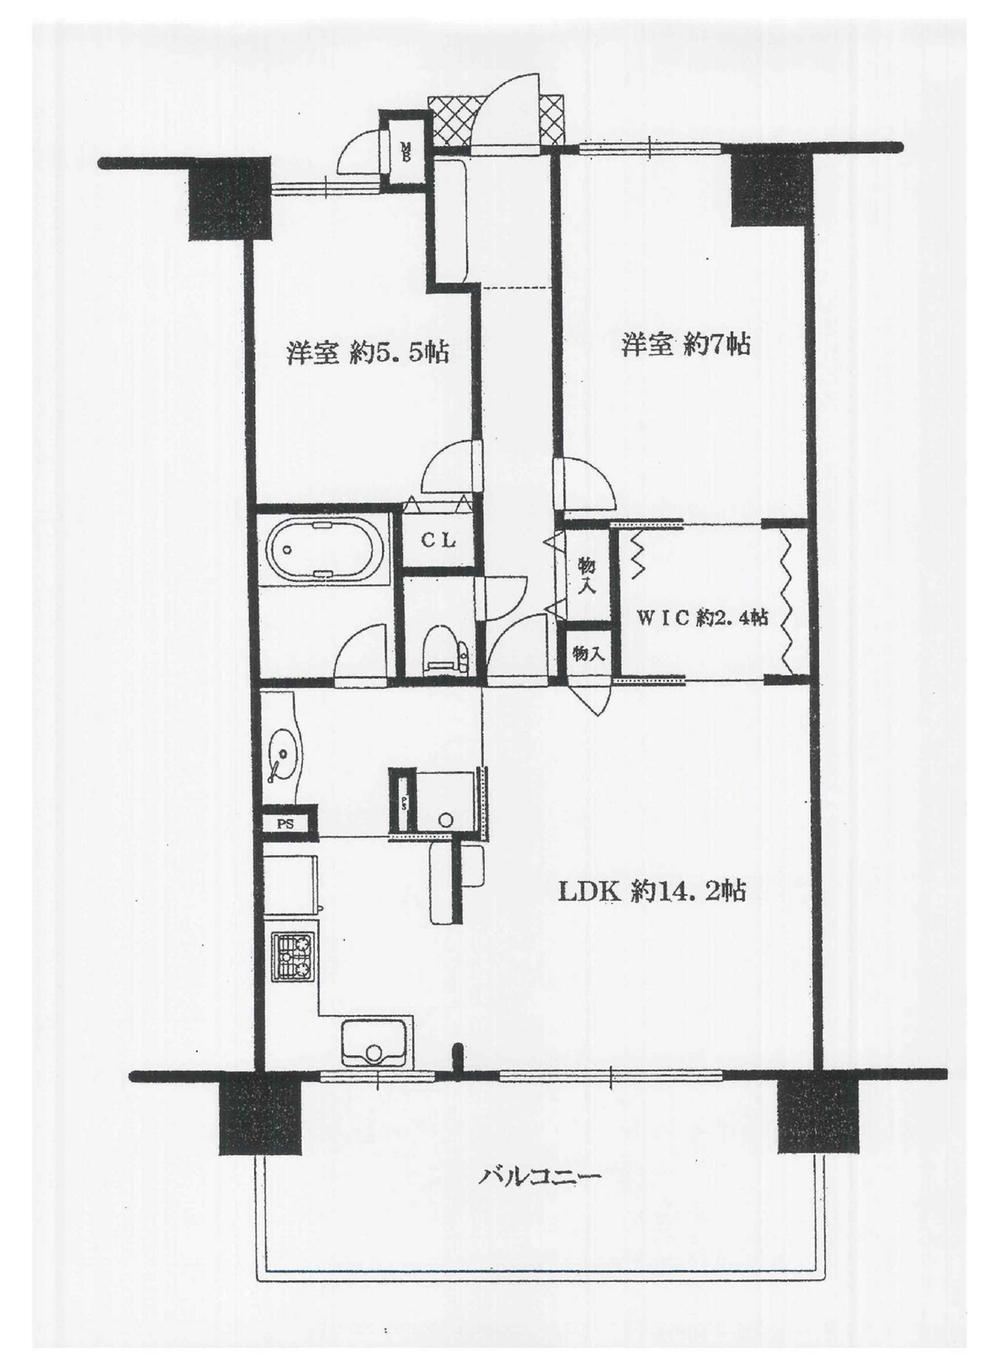 Floor plan. 2LDK, Price 31,800,000 yen, Occupied area 64.12 sq m , Balcony area 11 sq m